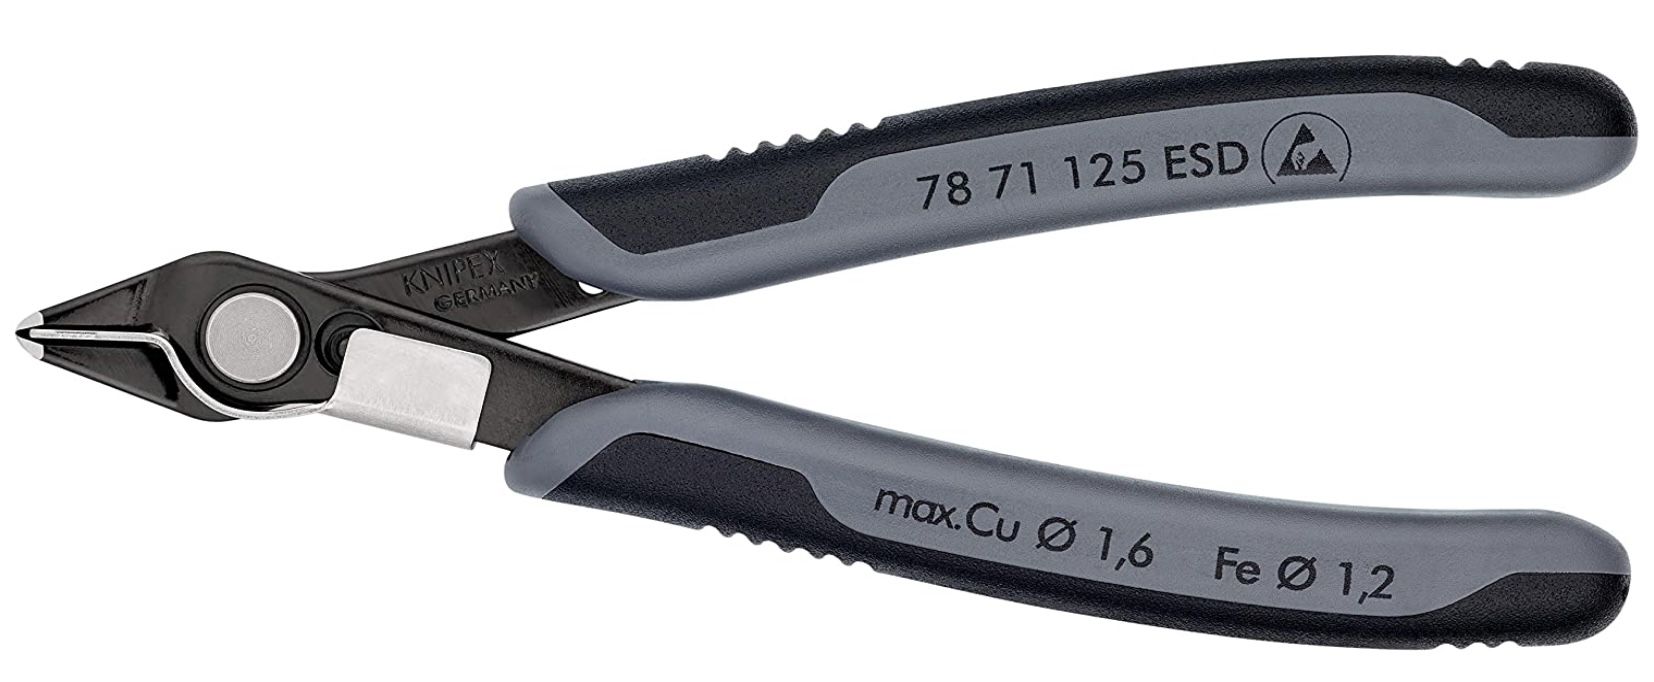 KNIPEX Electronic Super Knips ESD für 17€ (statt 22€)